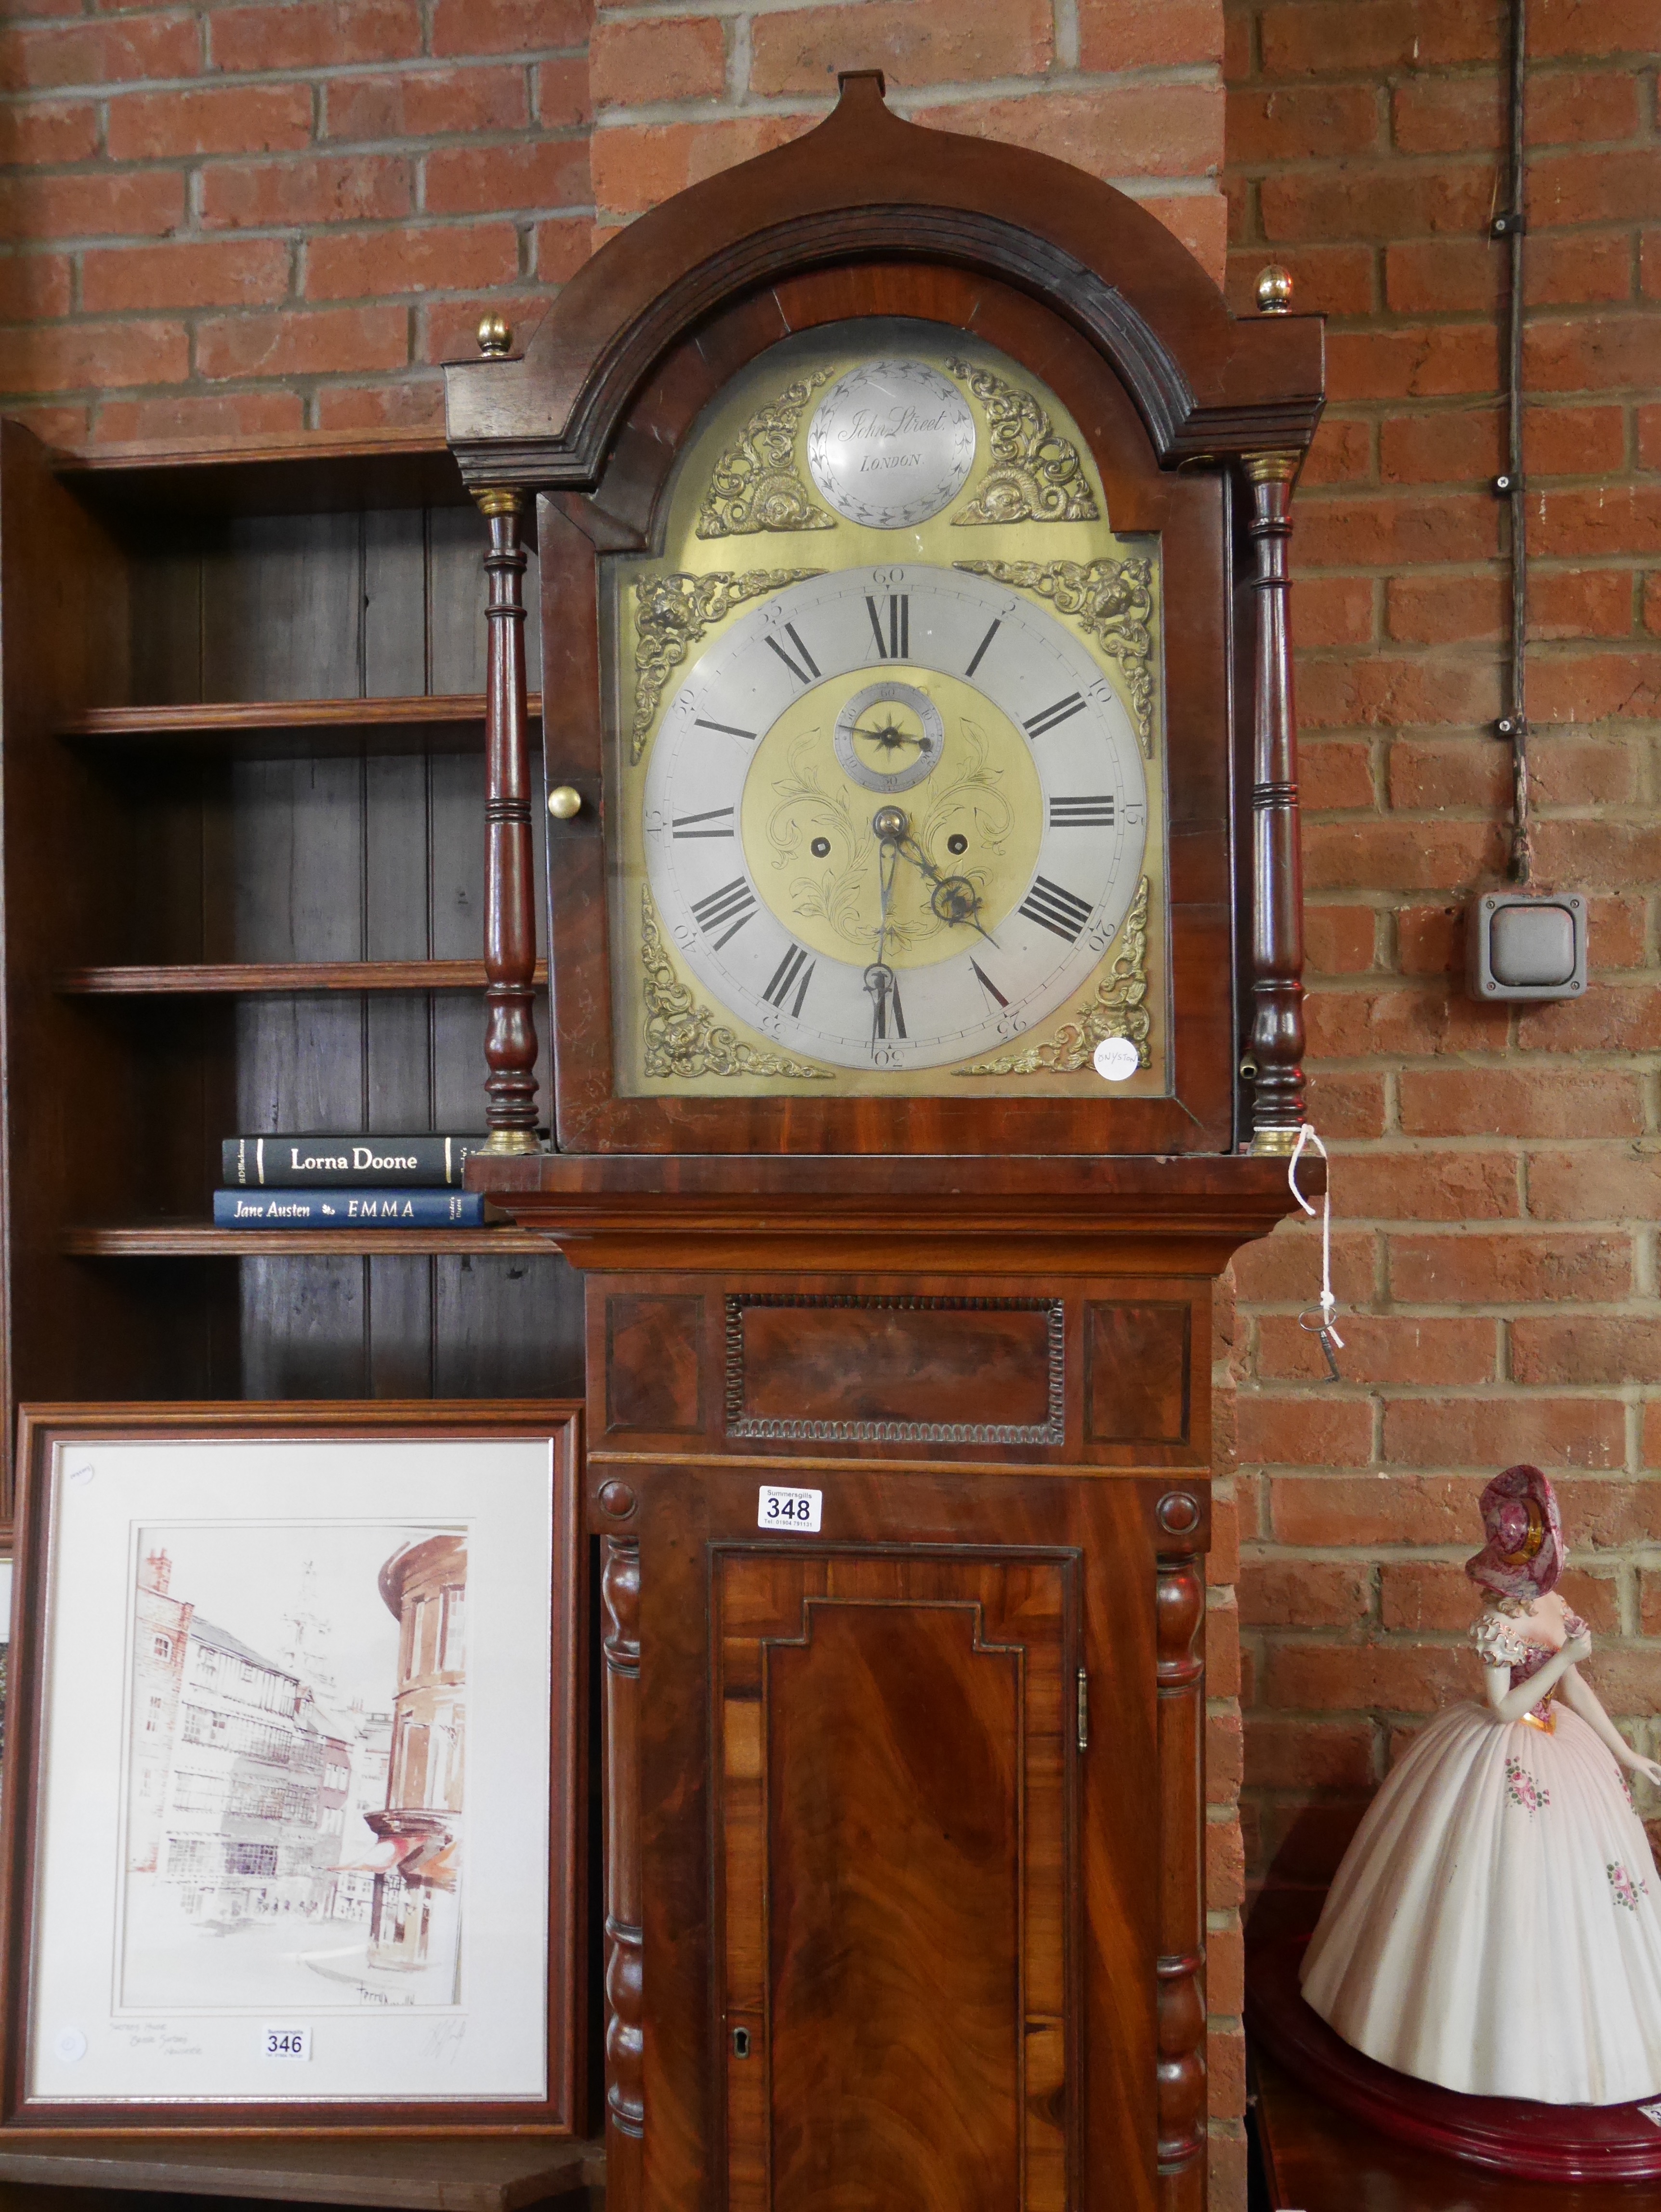 Mahogany long cased clock with brass face by John Street, London